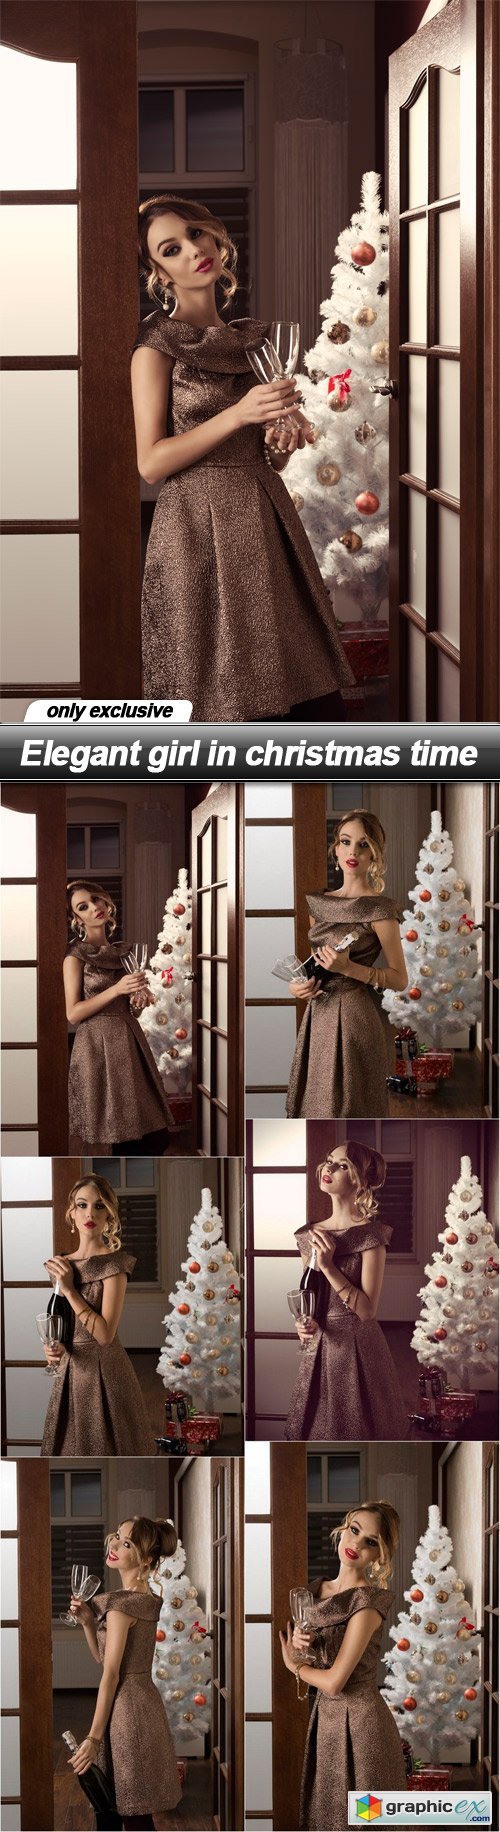 Elegant girl in christmas time - 6 UHQ JPEG